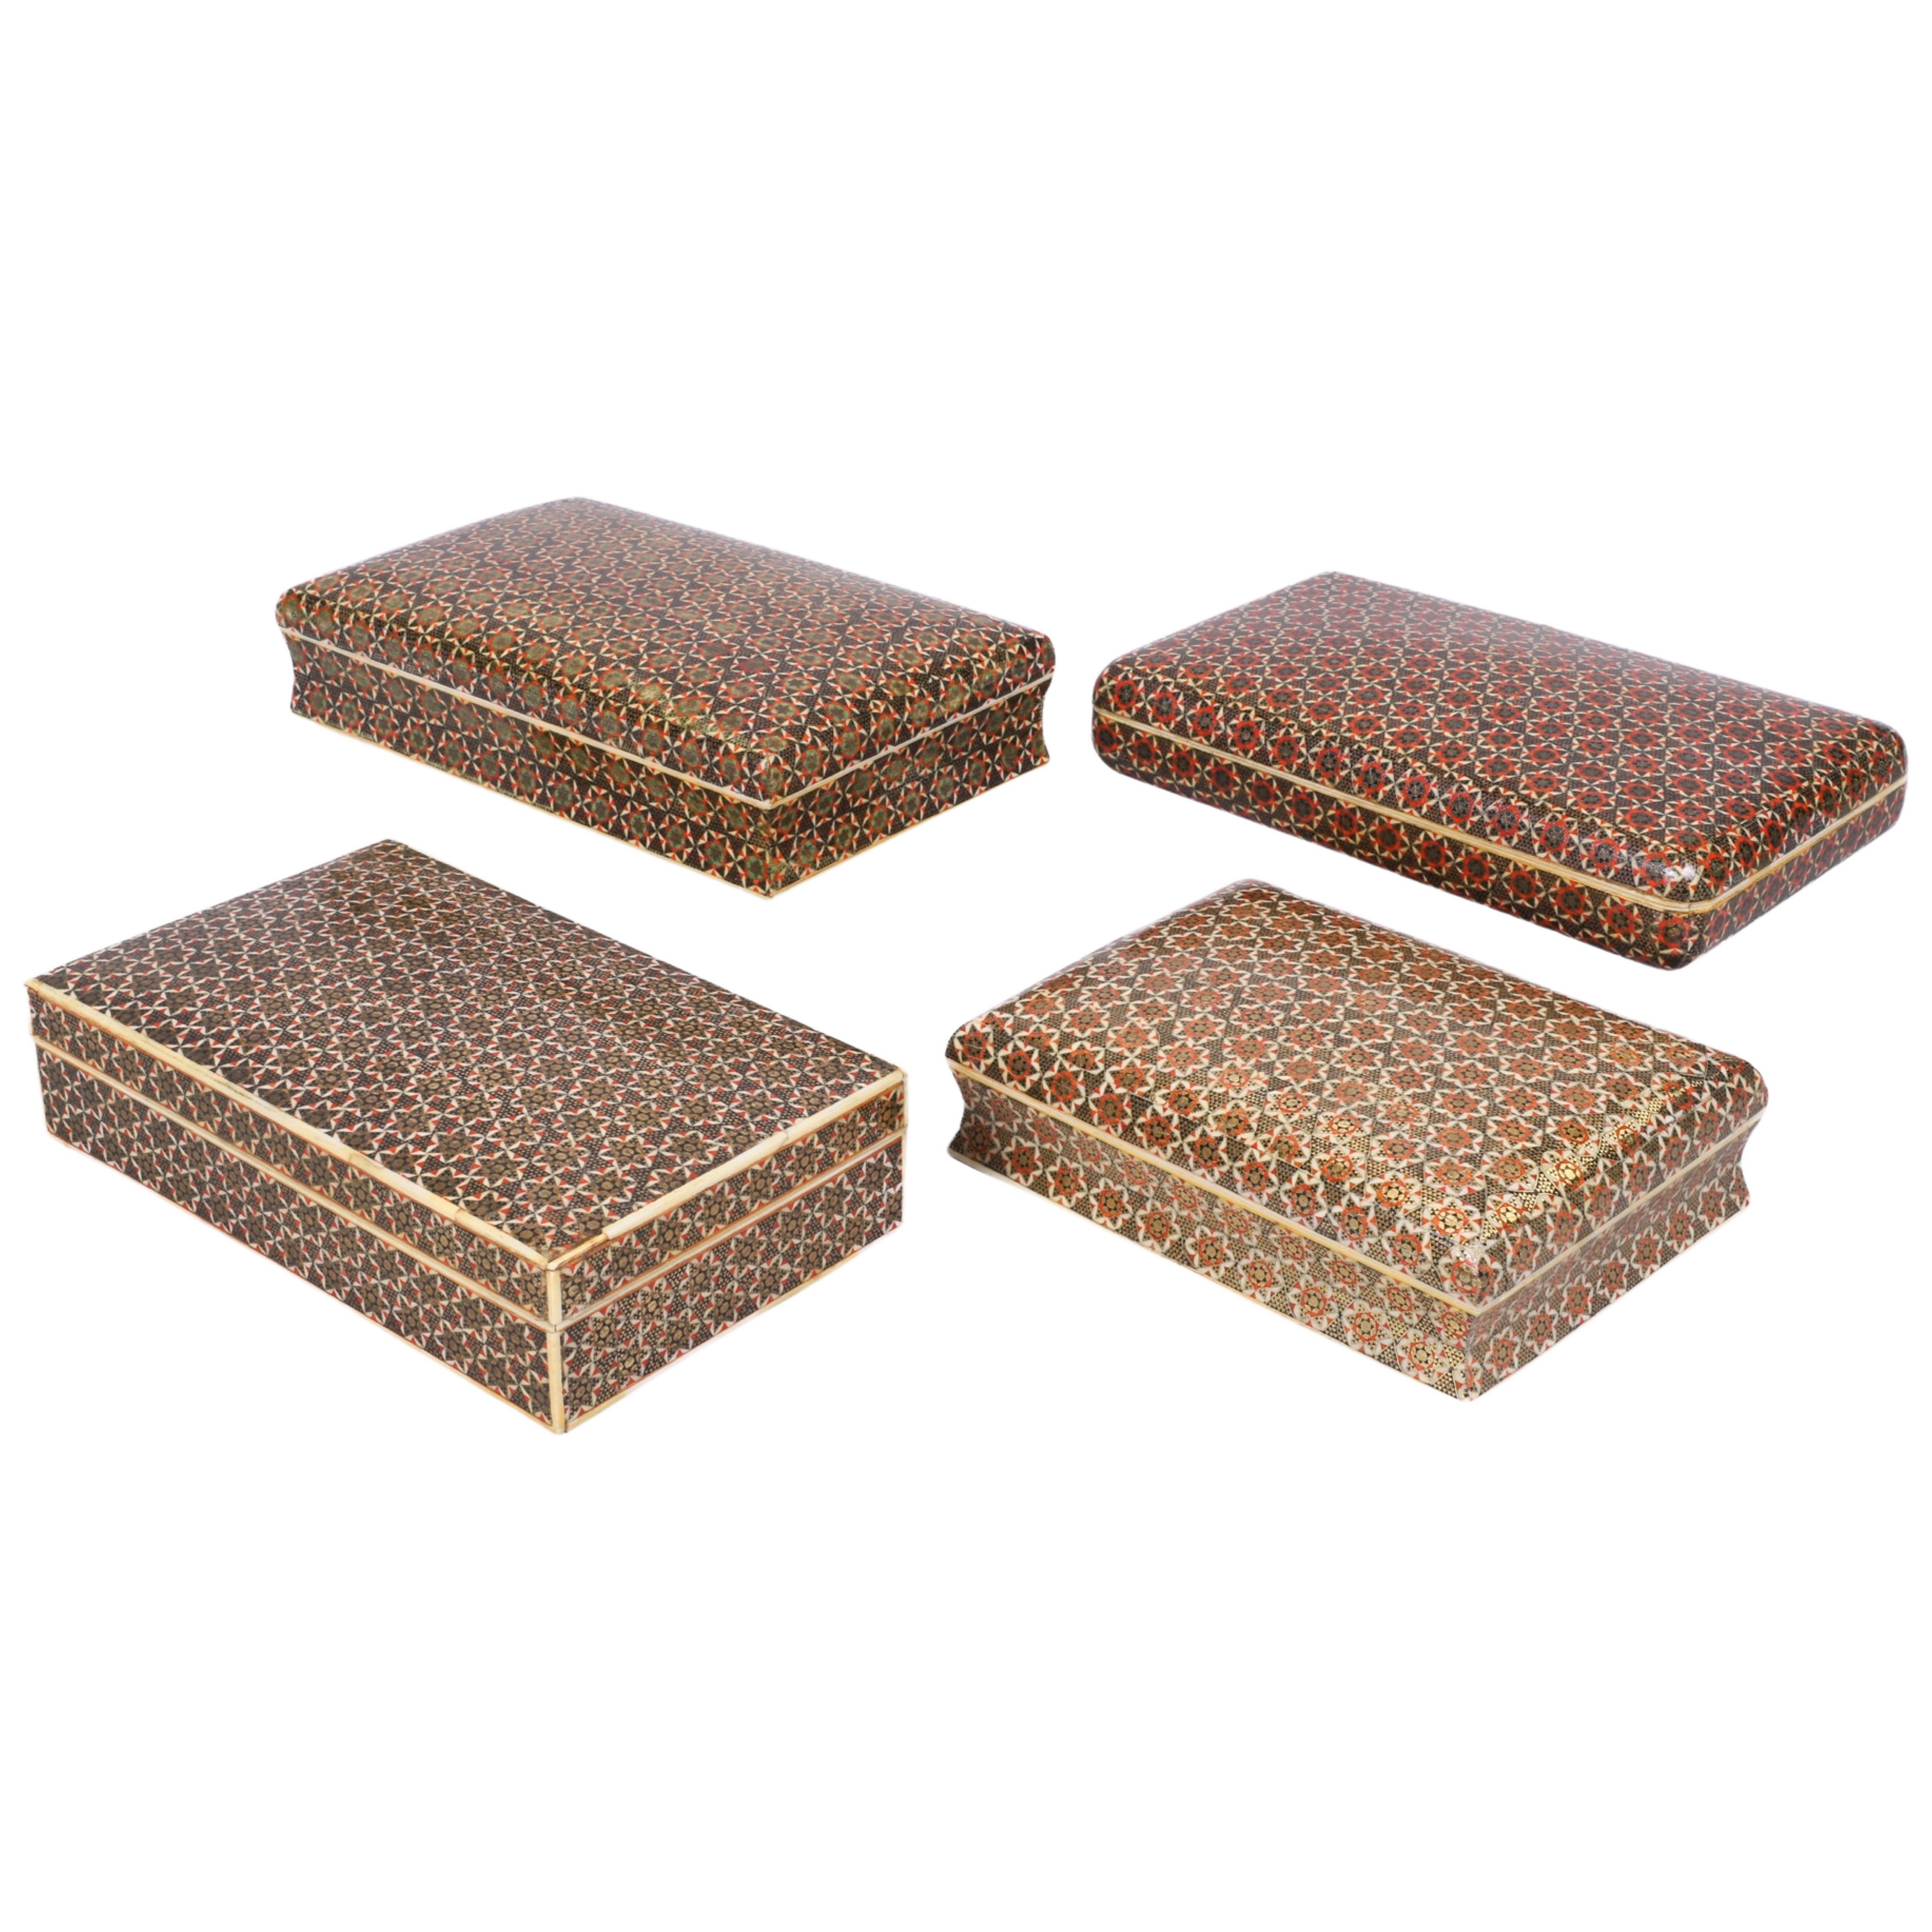  4 Persian Khatam boxes 6 1 2 L  3b48a8